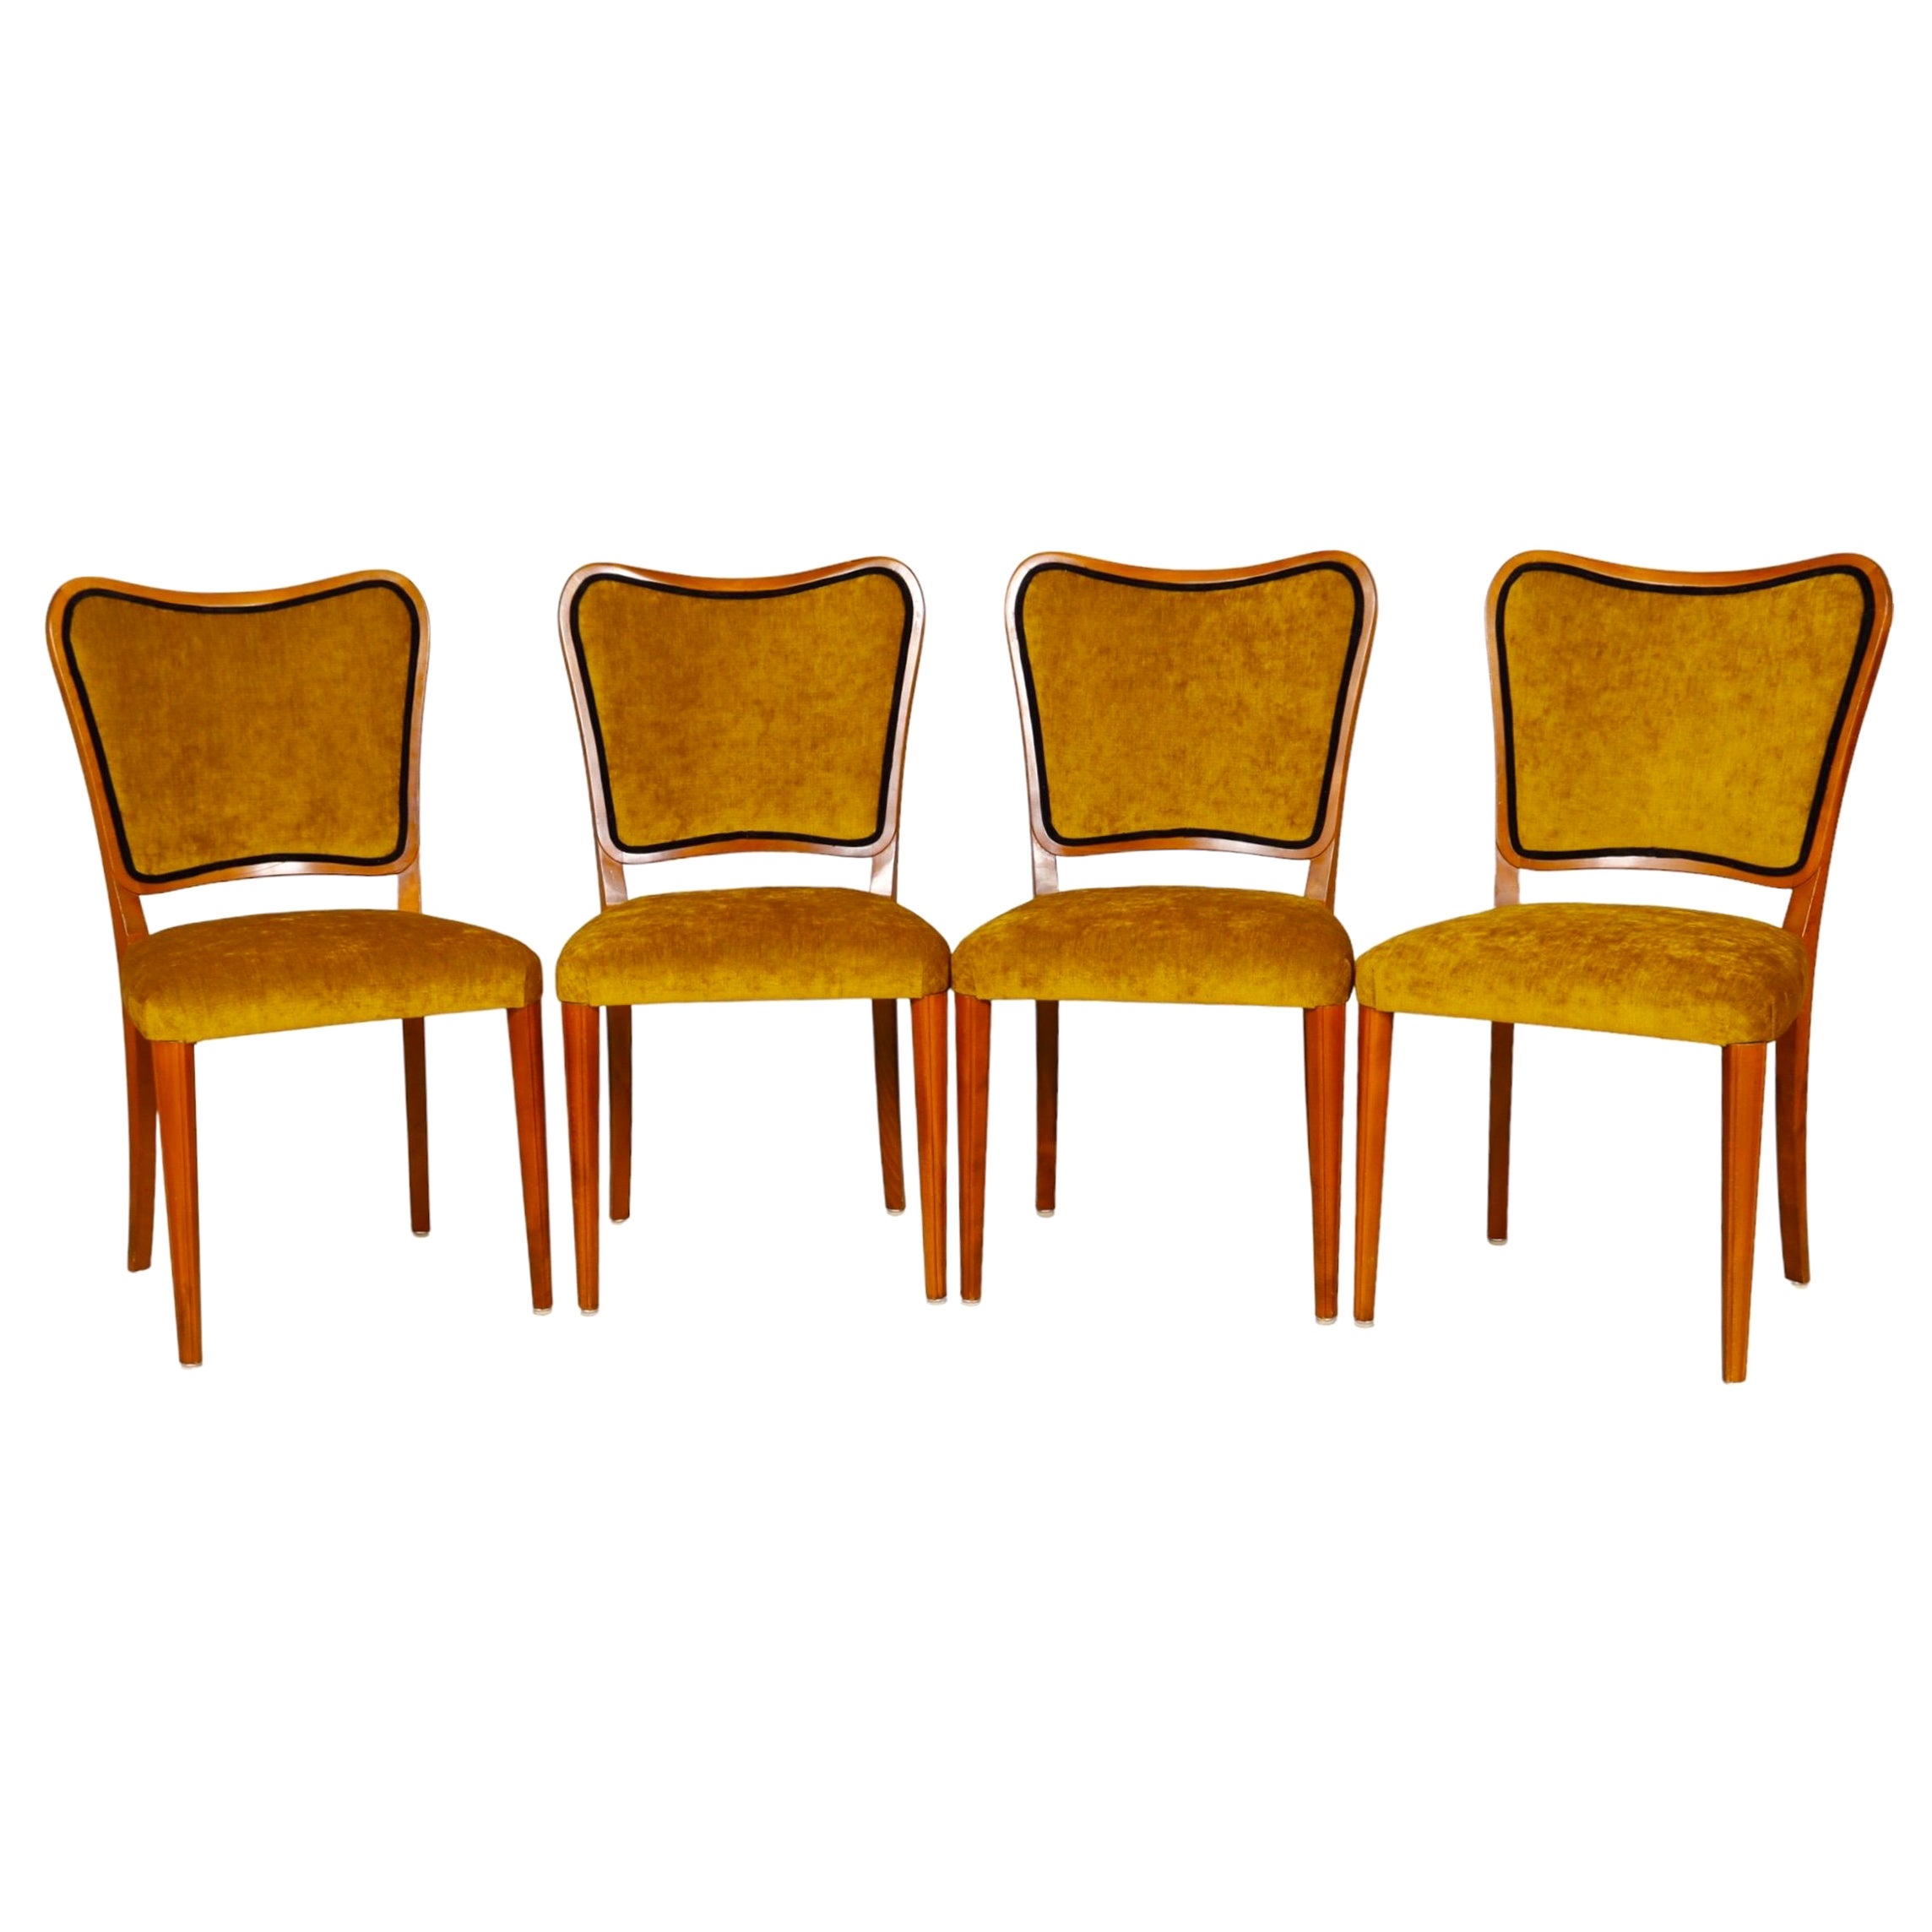 Set of 4 Danish Mid-Century Modern Dining Chairs